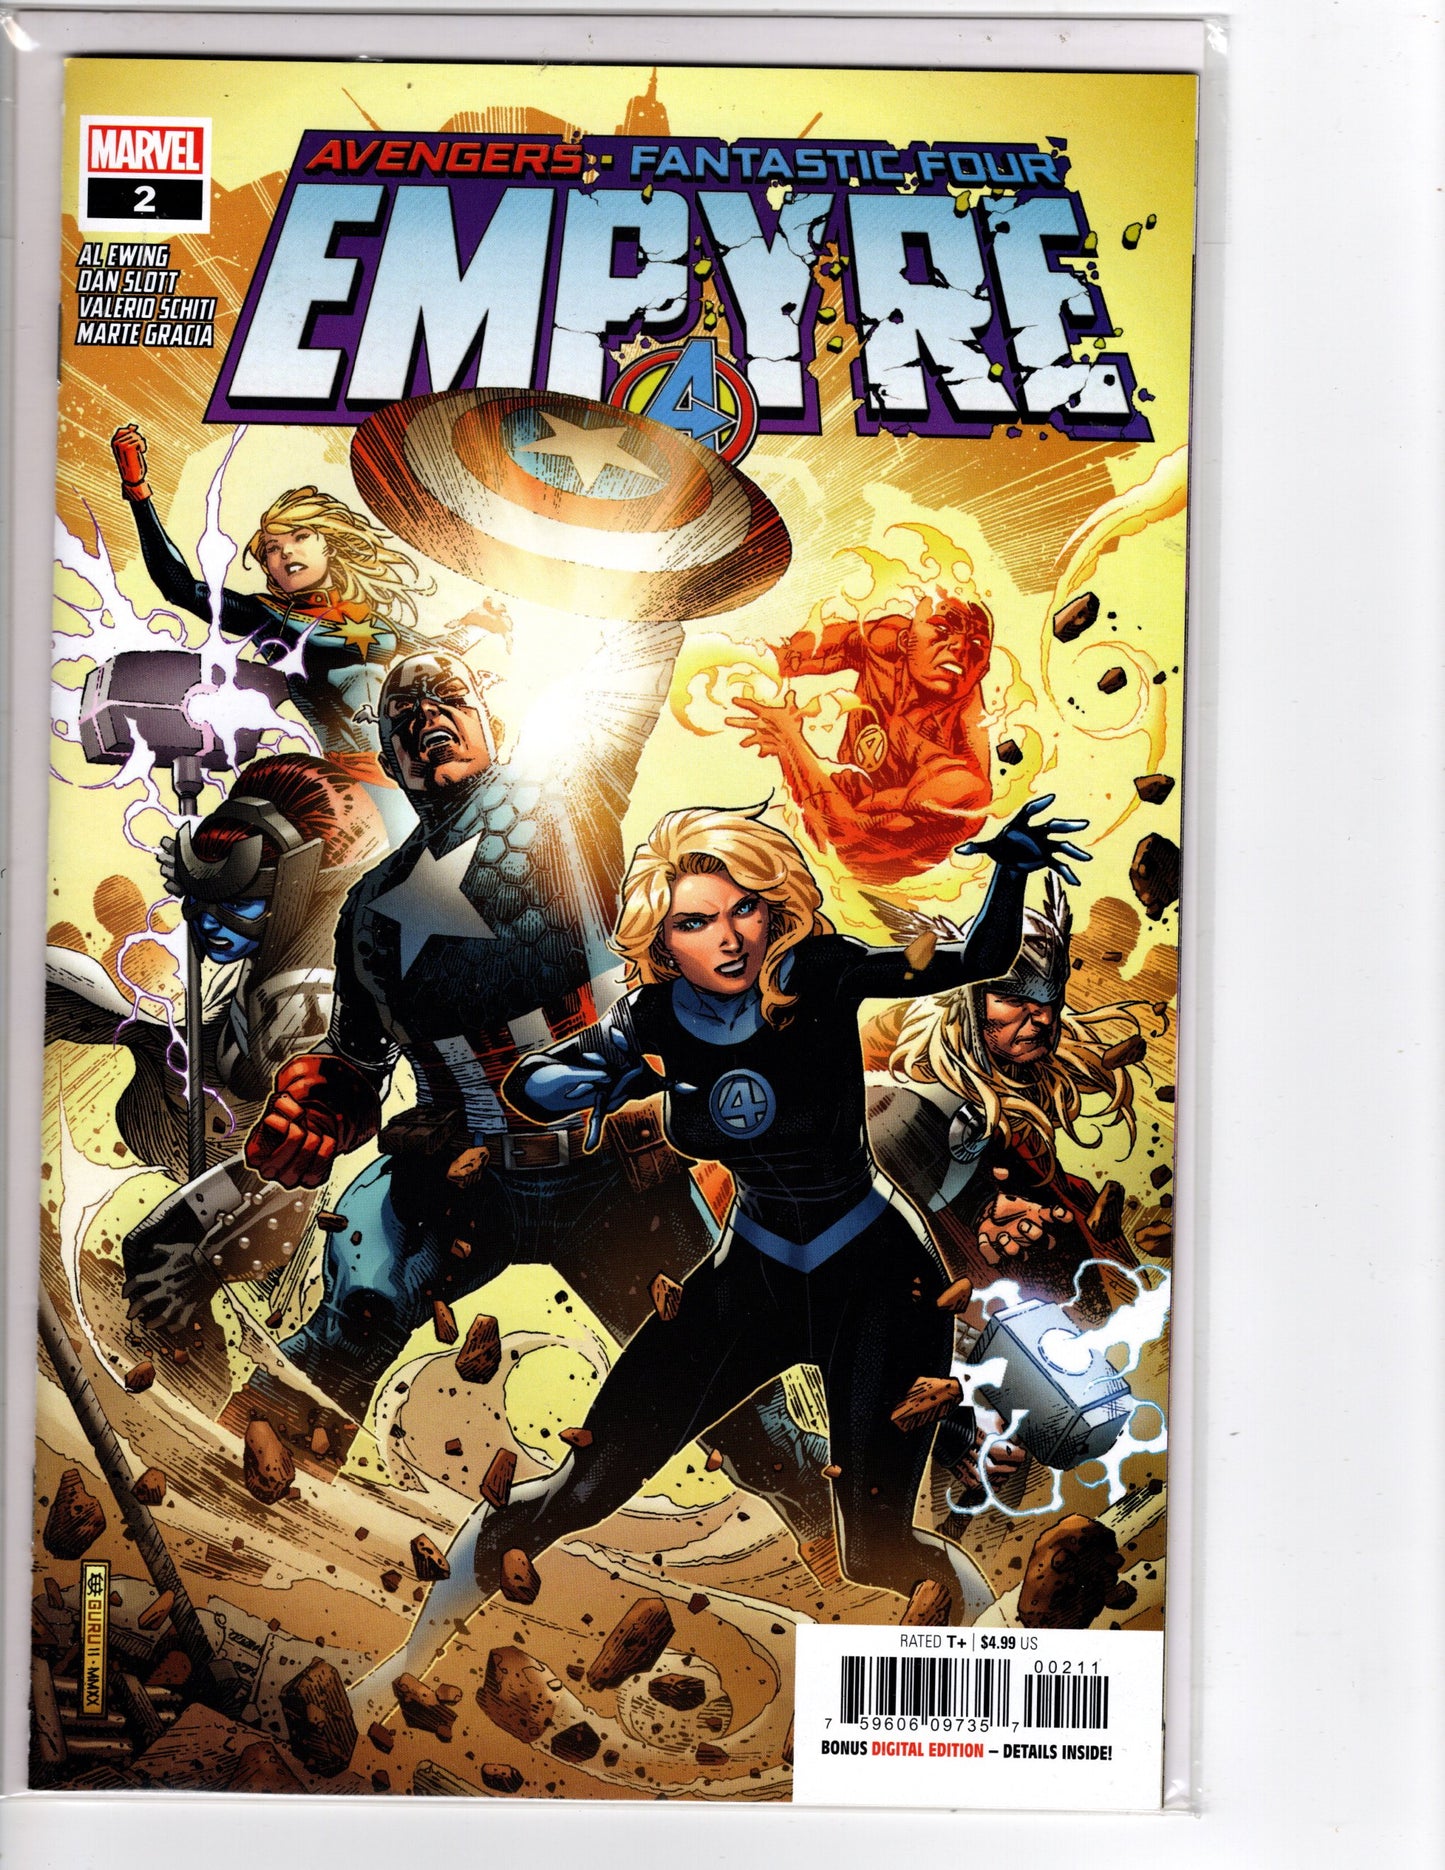 Avengers - Fantastic Four - Empyre #2